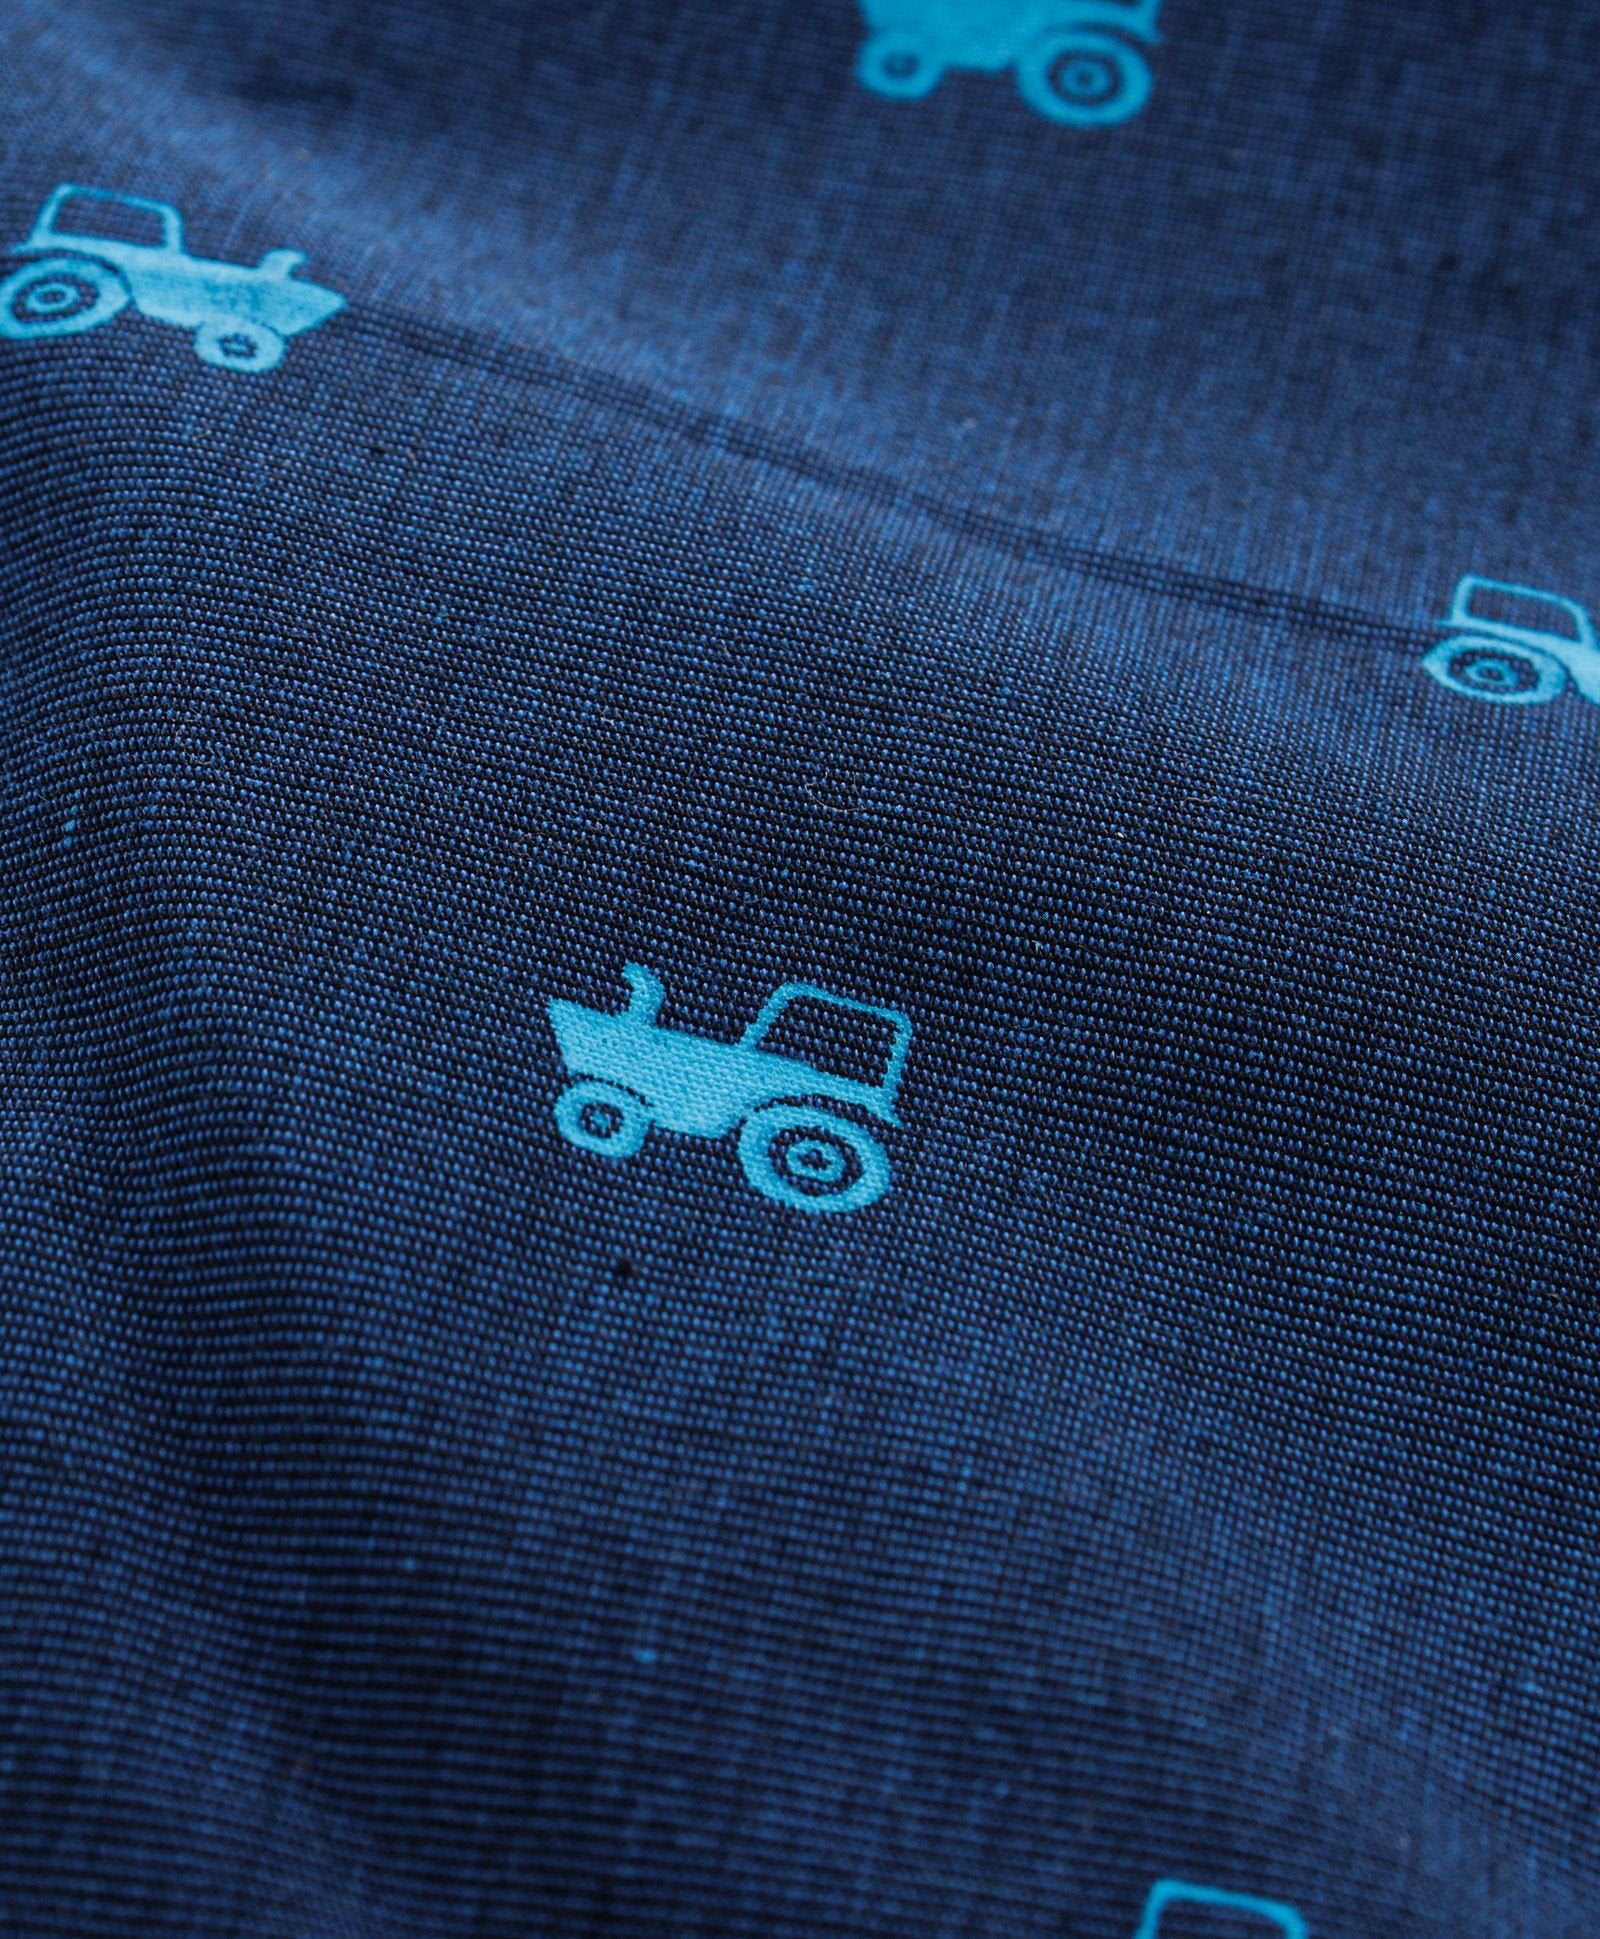 Full Sleeve Truck Print 100% Cotton Soft Feel Biowash Shirt - Navy